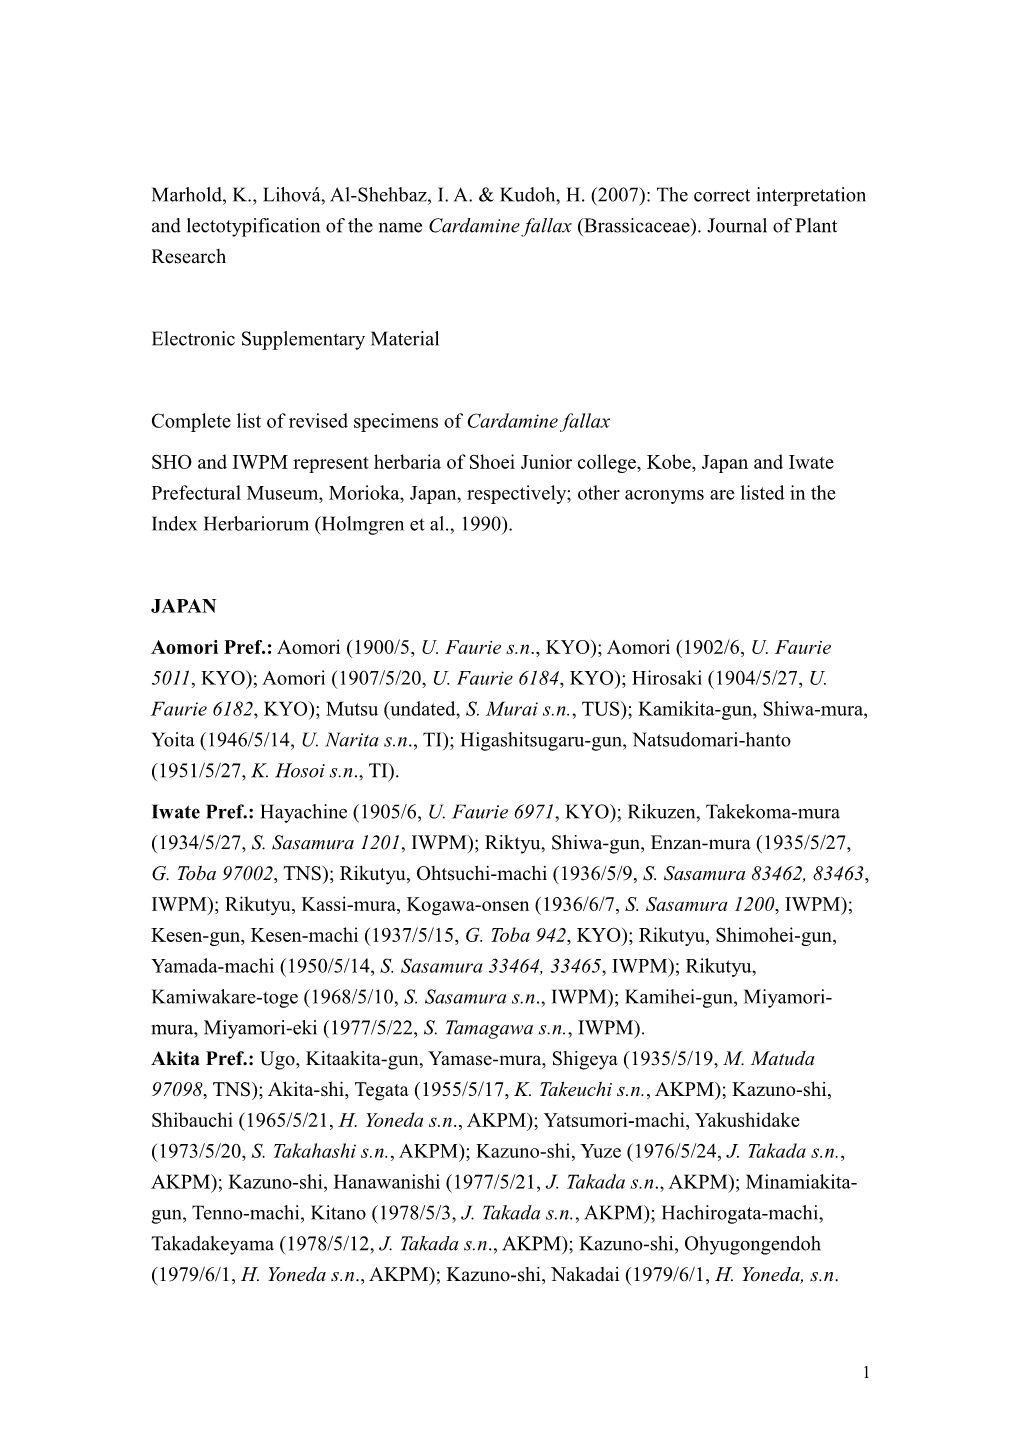 Complete List of Revised Specimens of Cardamine Fallax